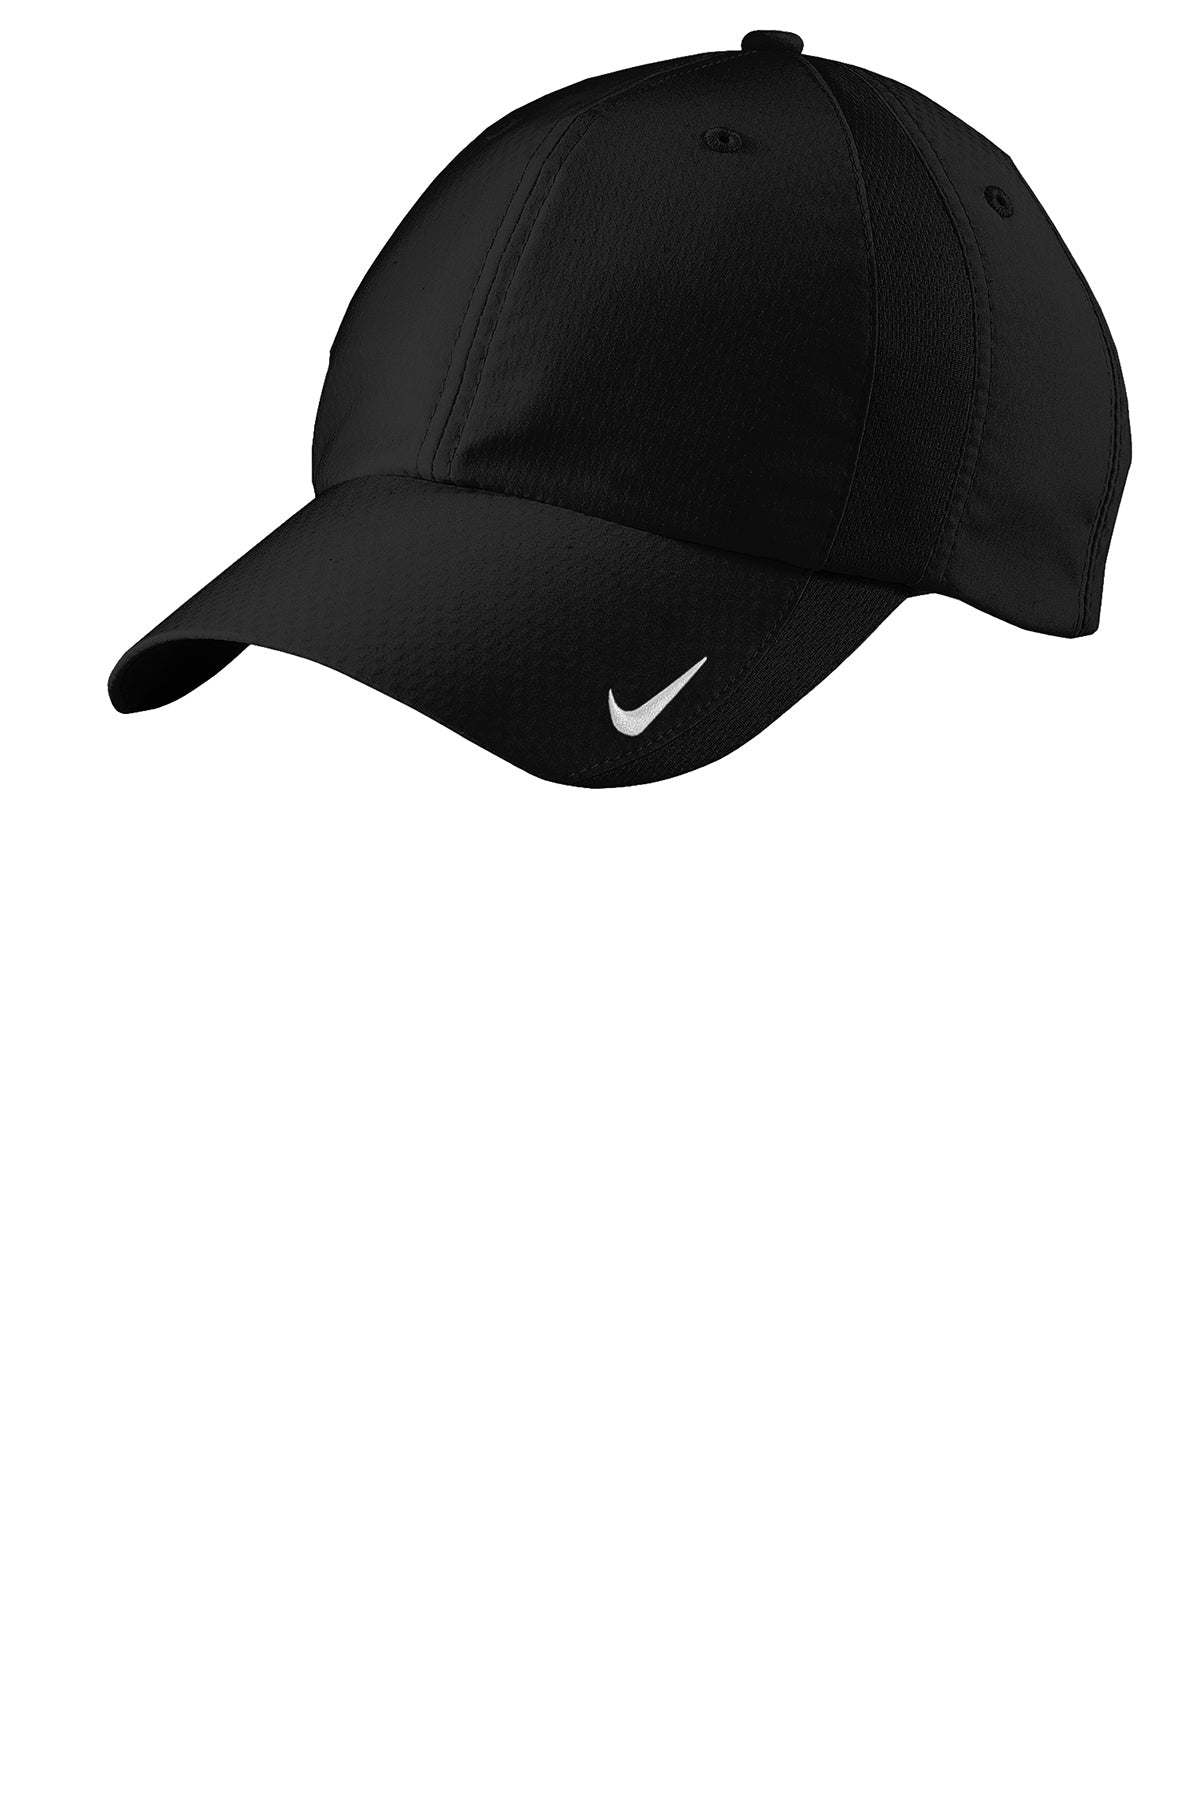 Nike Sphere Dry Custom Caps, Black